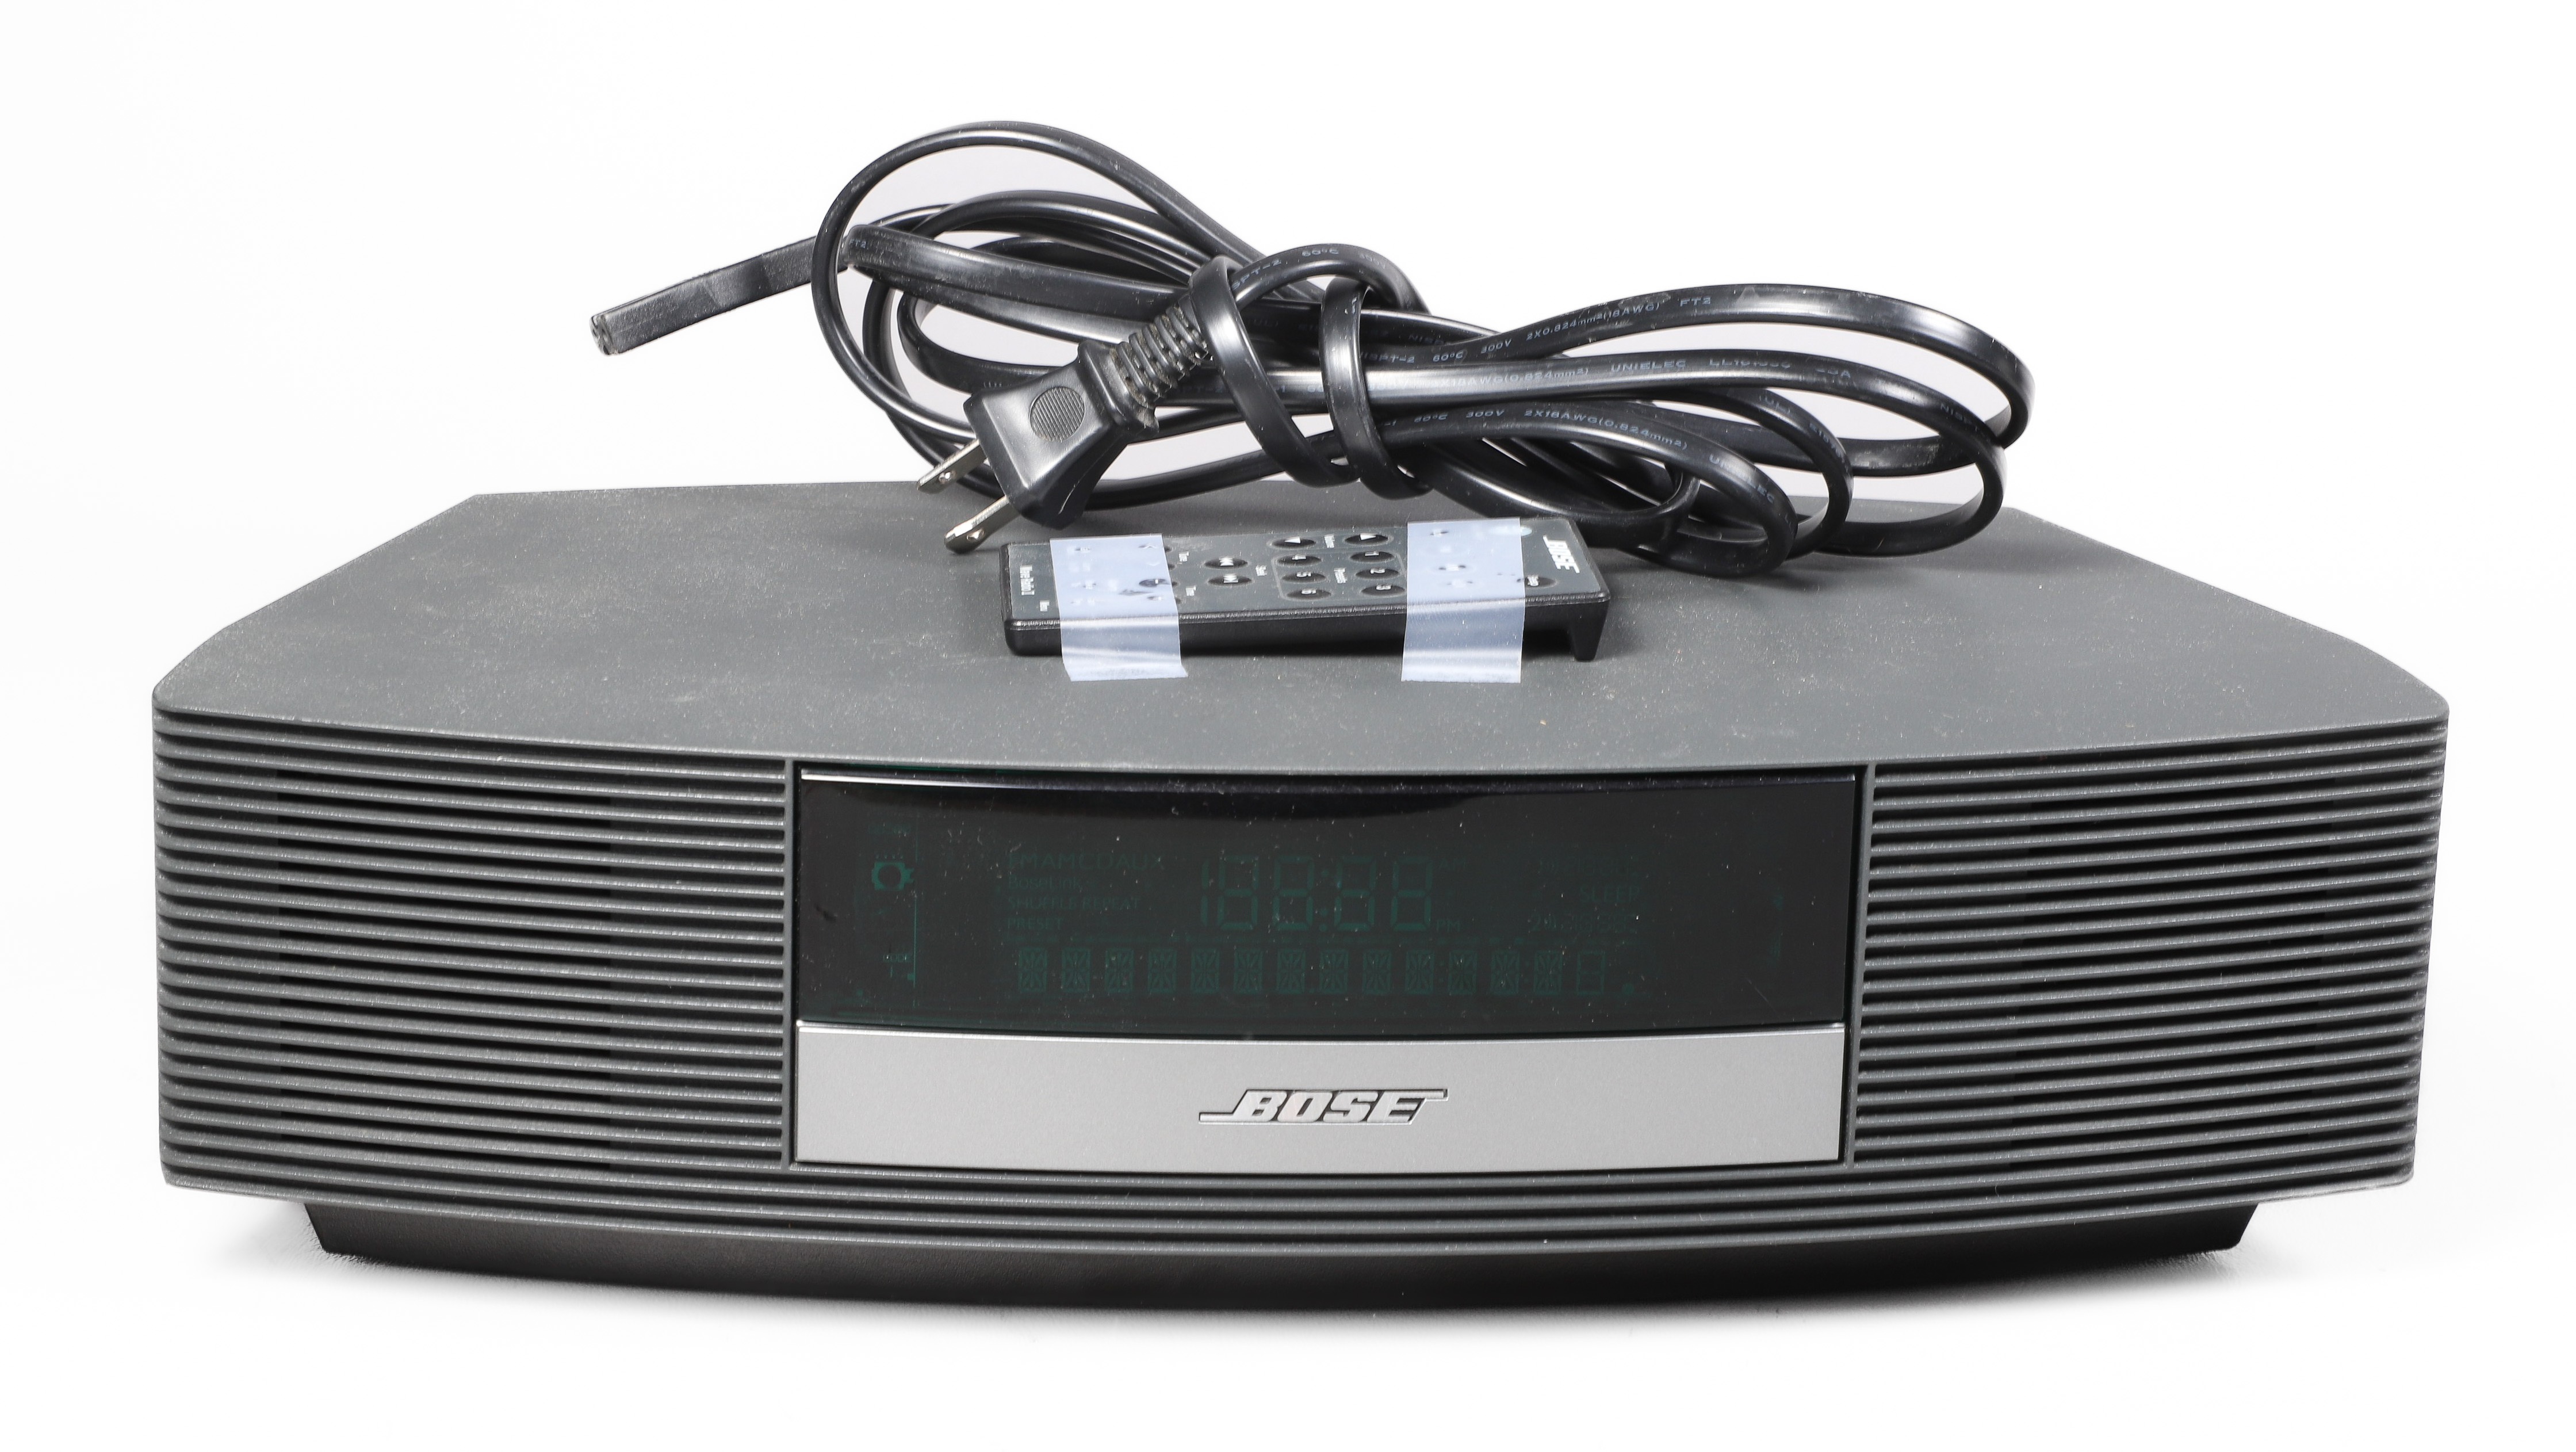 Bose Sound Wave II radio, includes